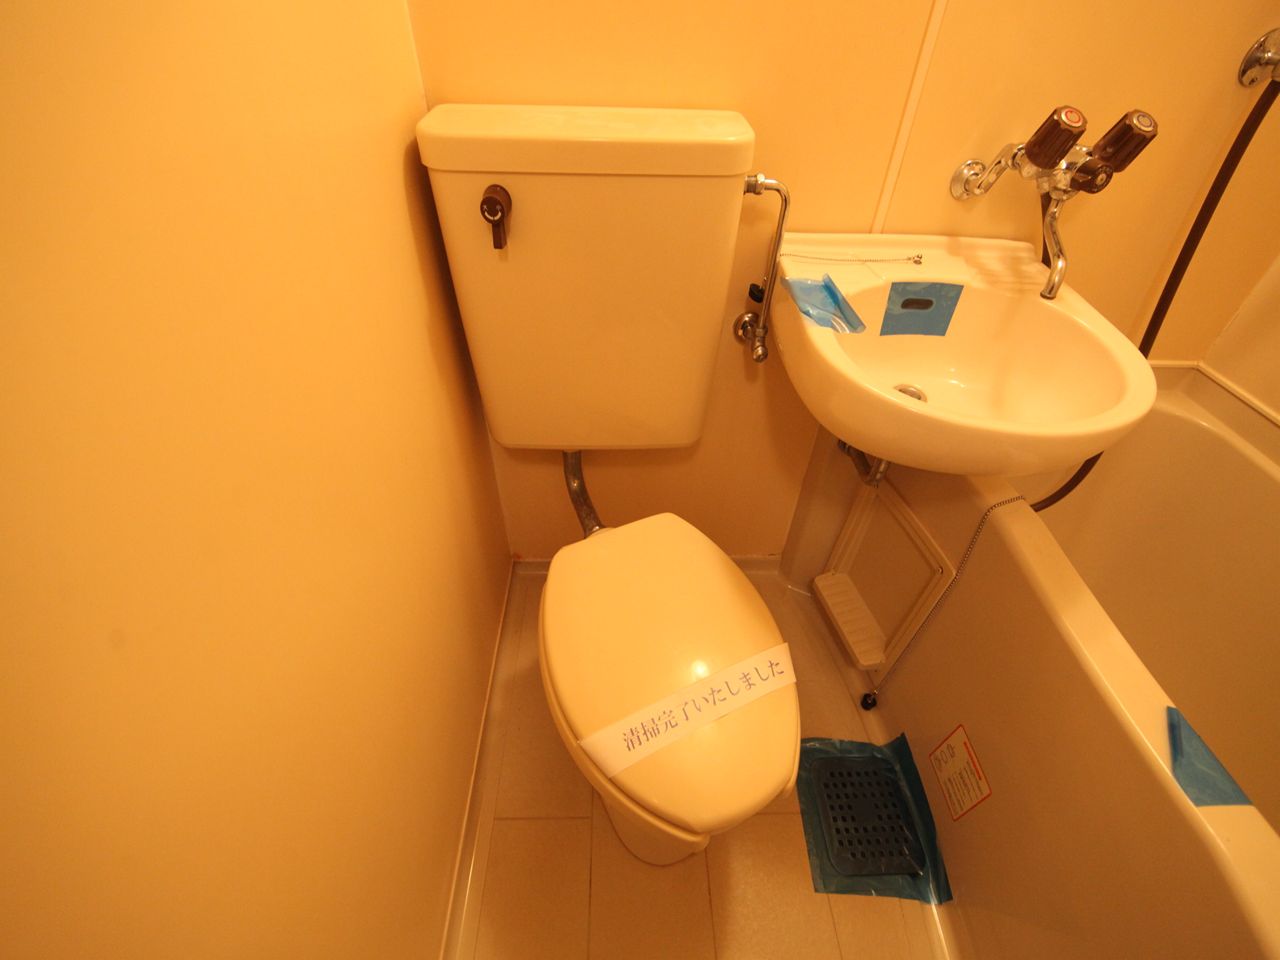 Toilet. Bathroom toilet